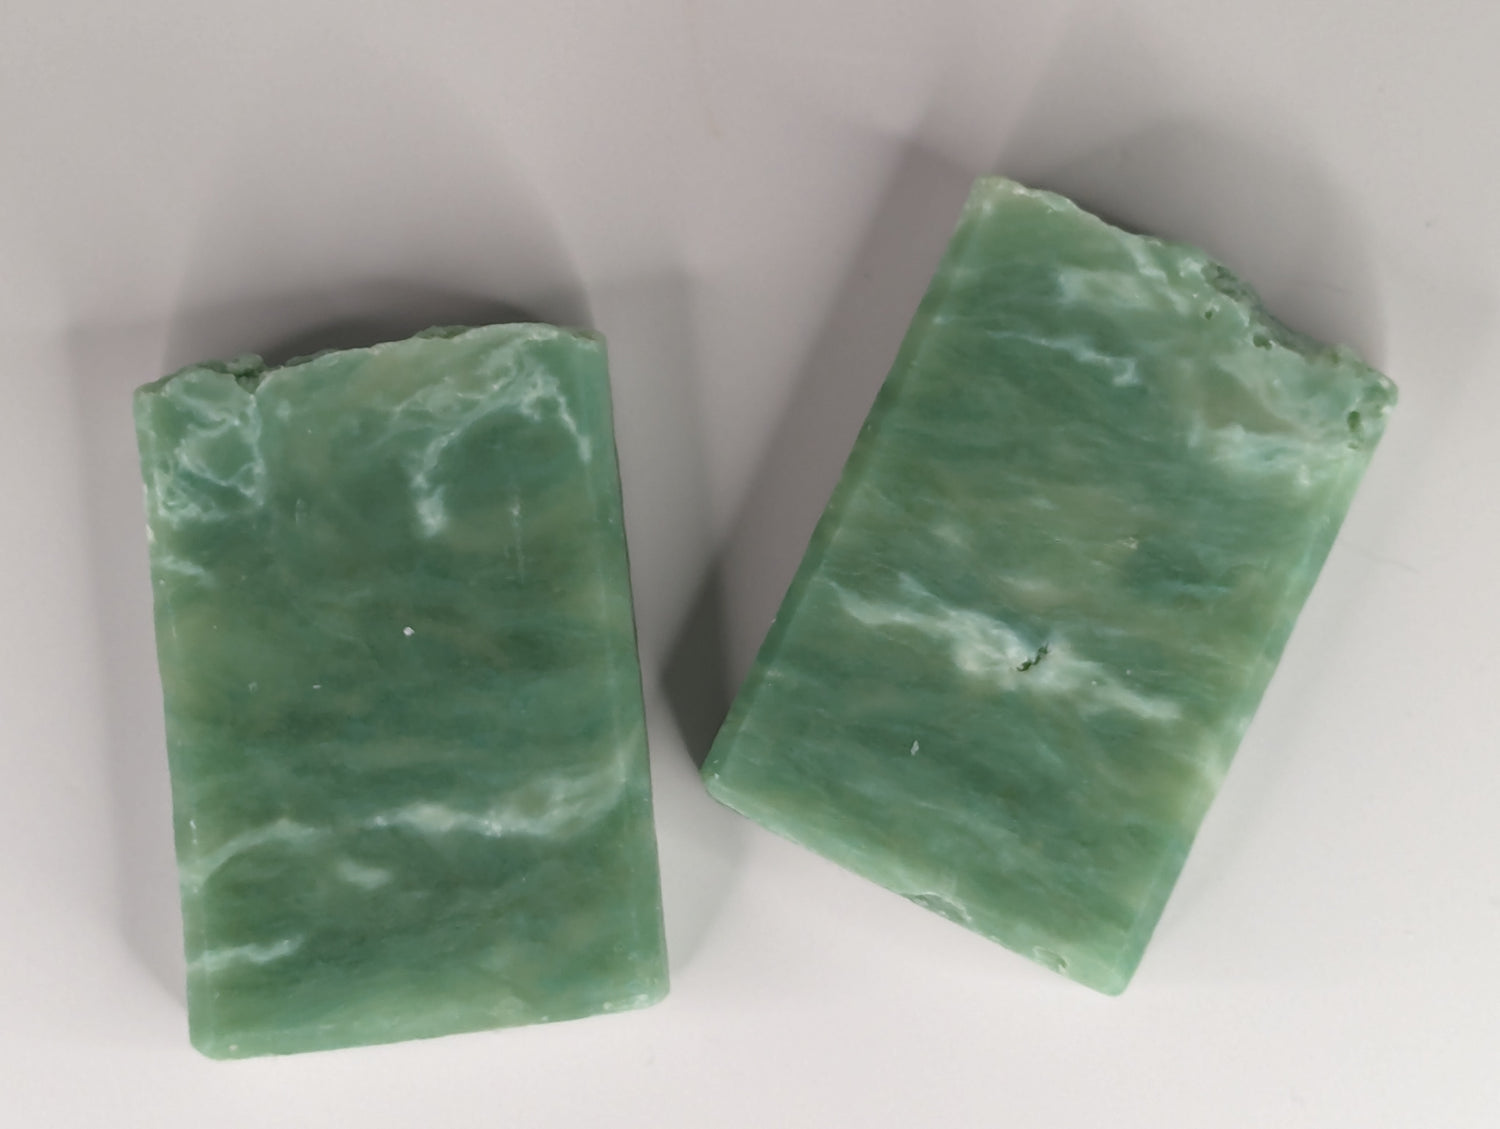 Eucalyptus and Spearmint Essential Oil Soap